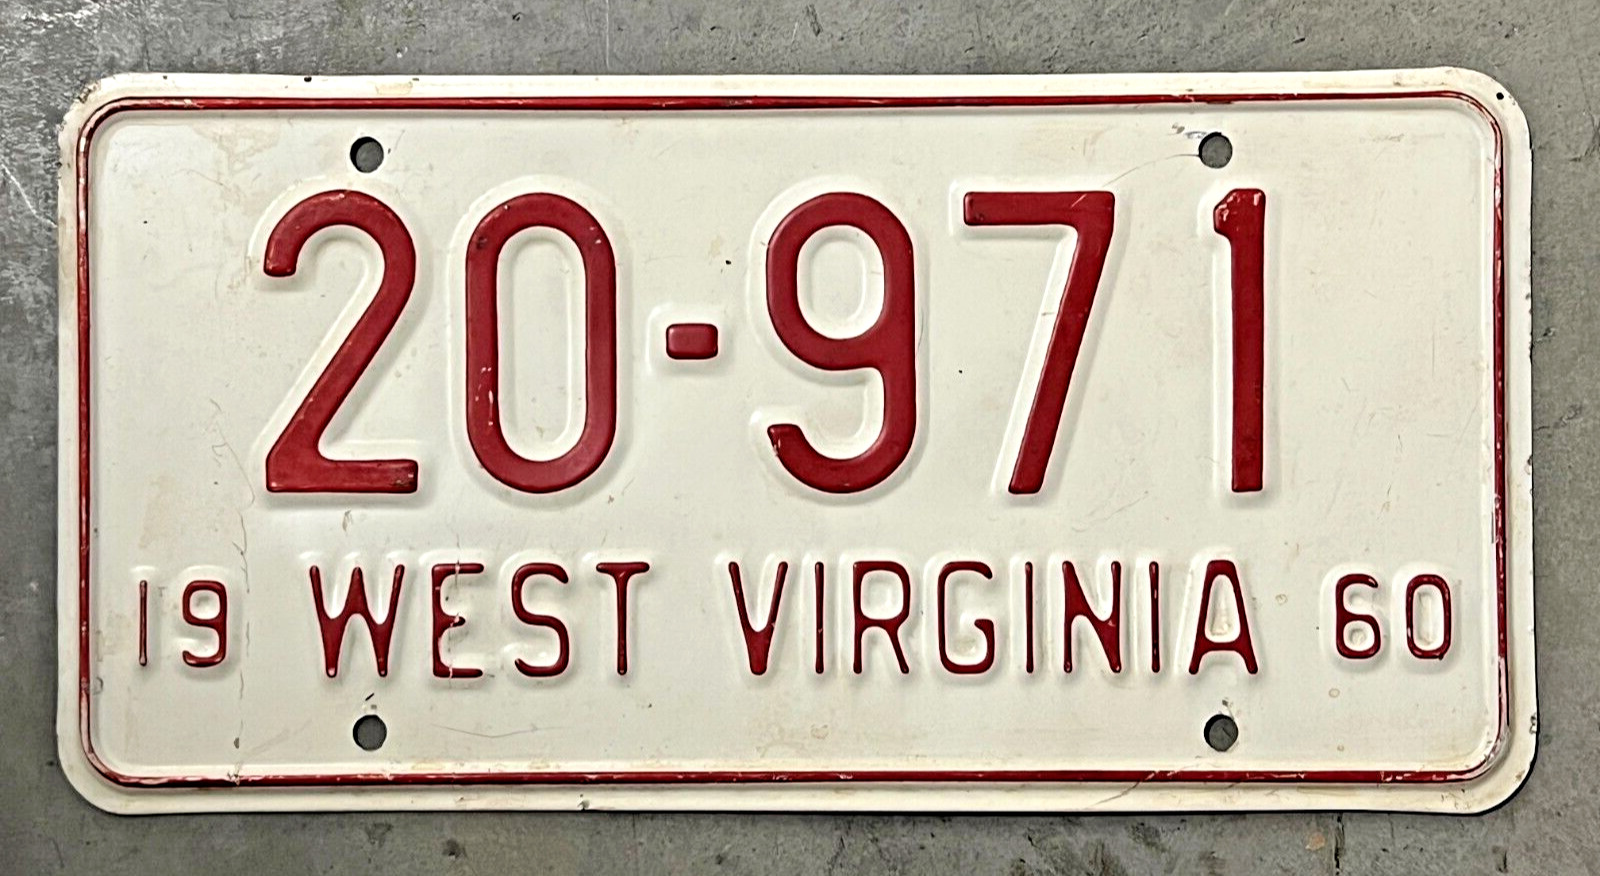 1960 WEST VIRGINIA license plate - ORIGINAL BRILLIANT antique vintage auto tag